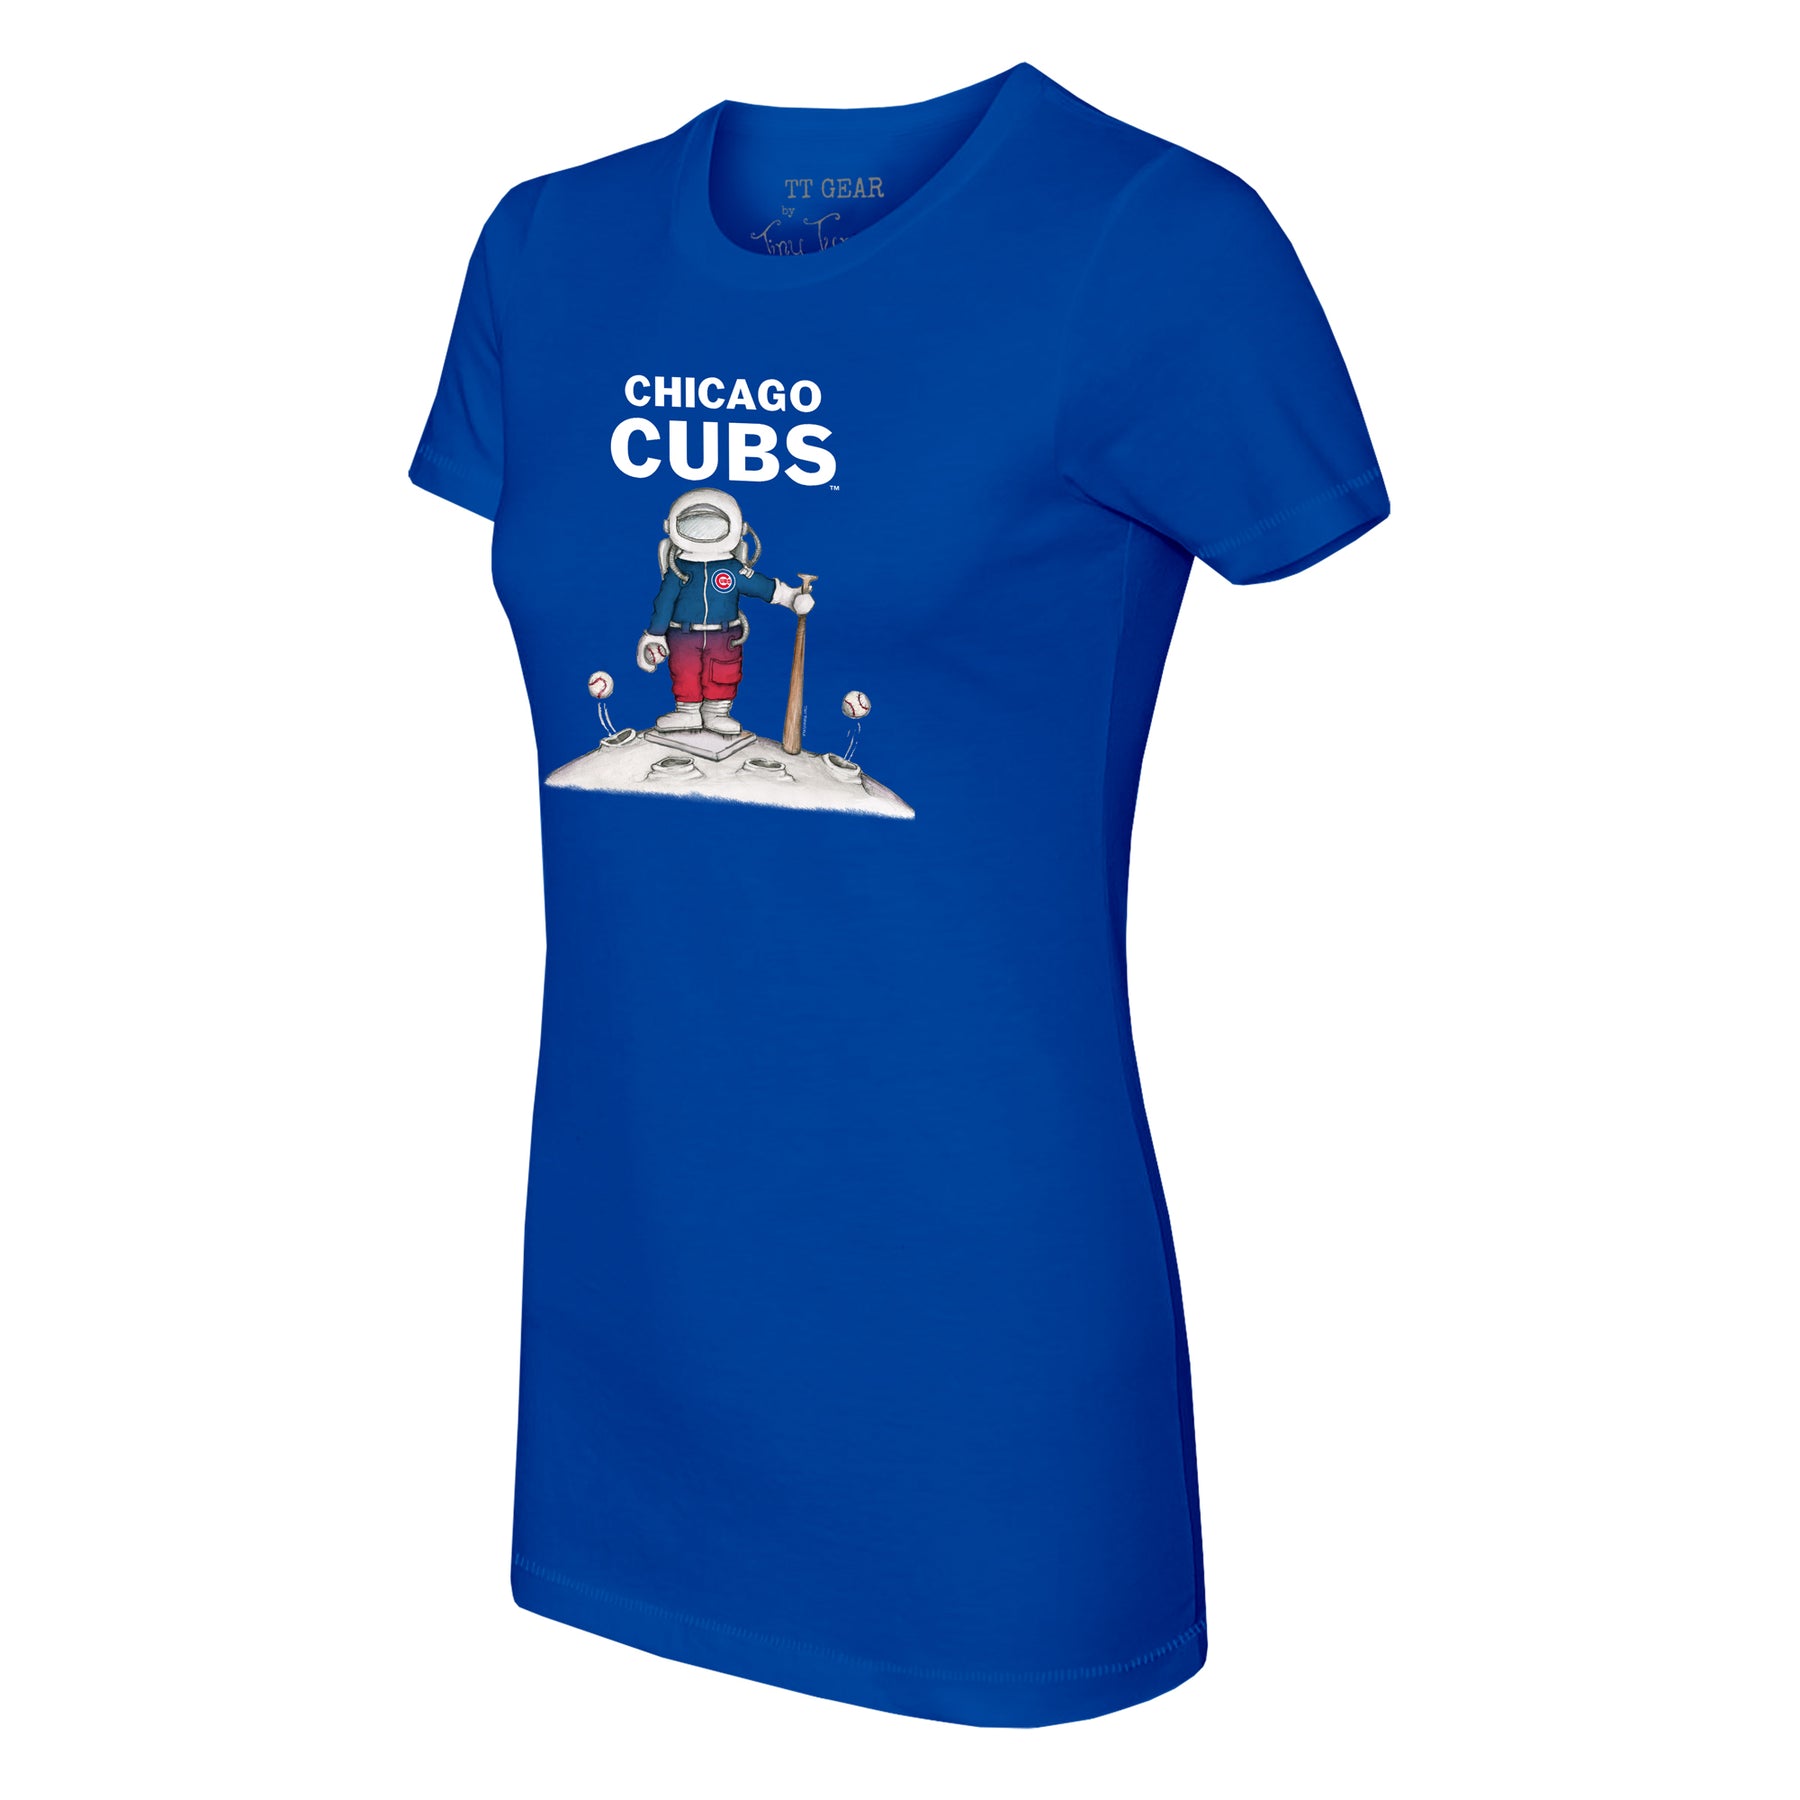 Tiny Turnip Chicago Cubs Astronaut Tee Shirt Women's XL / Royal Blue